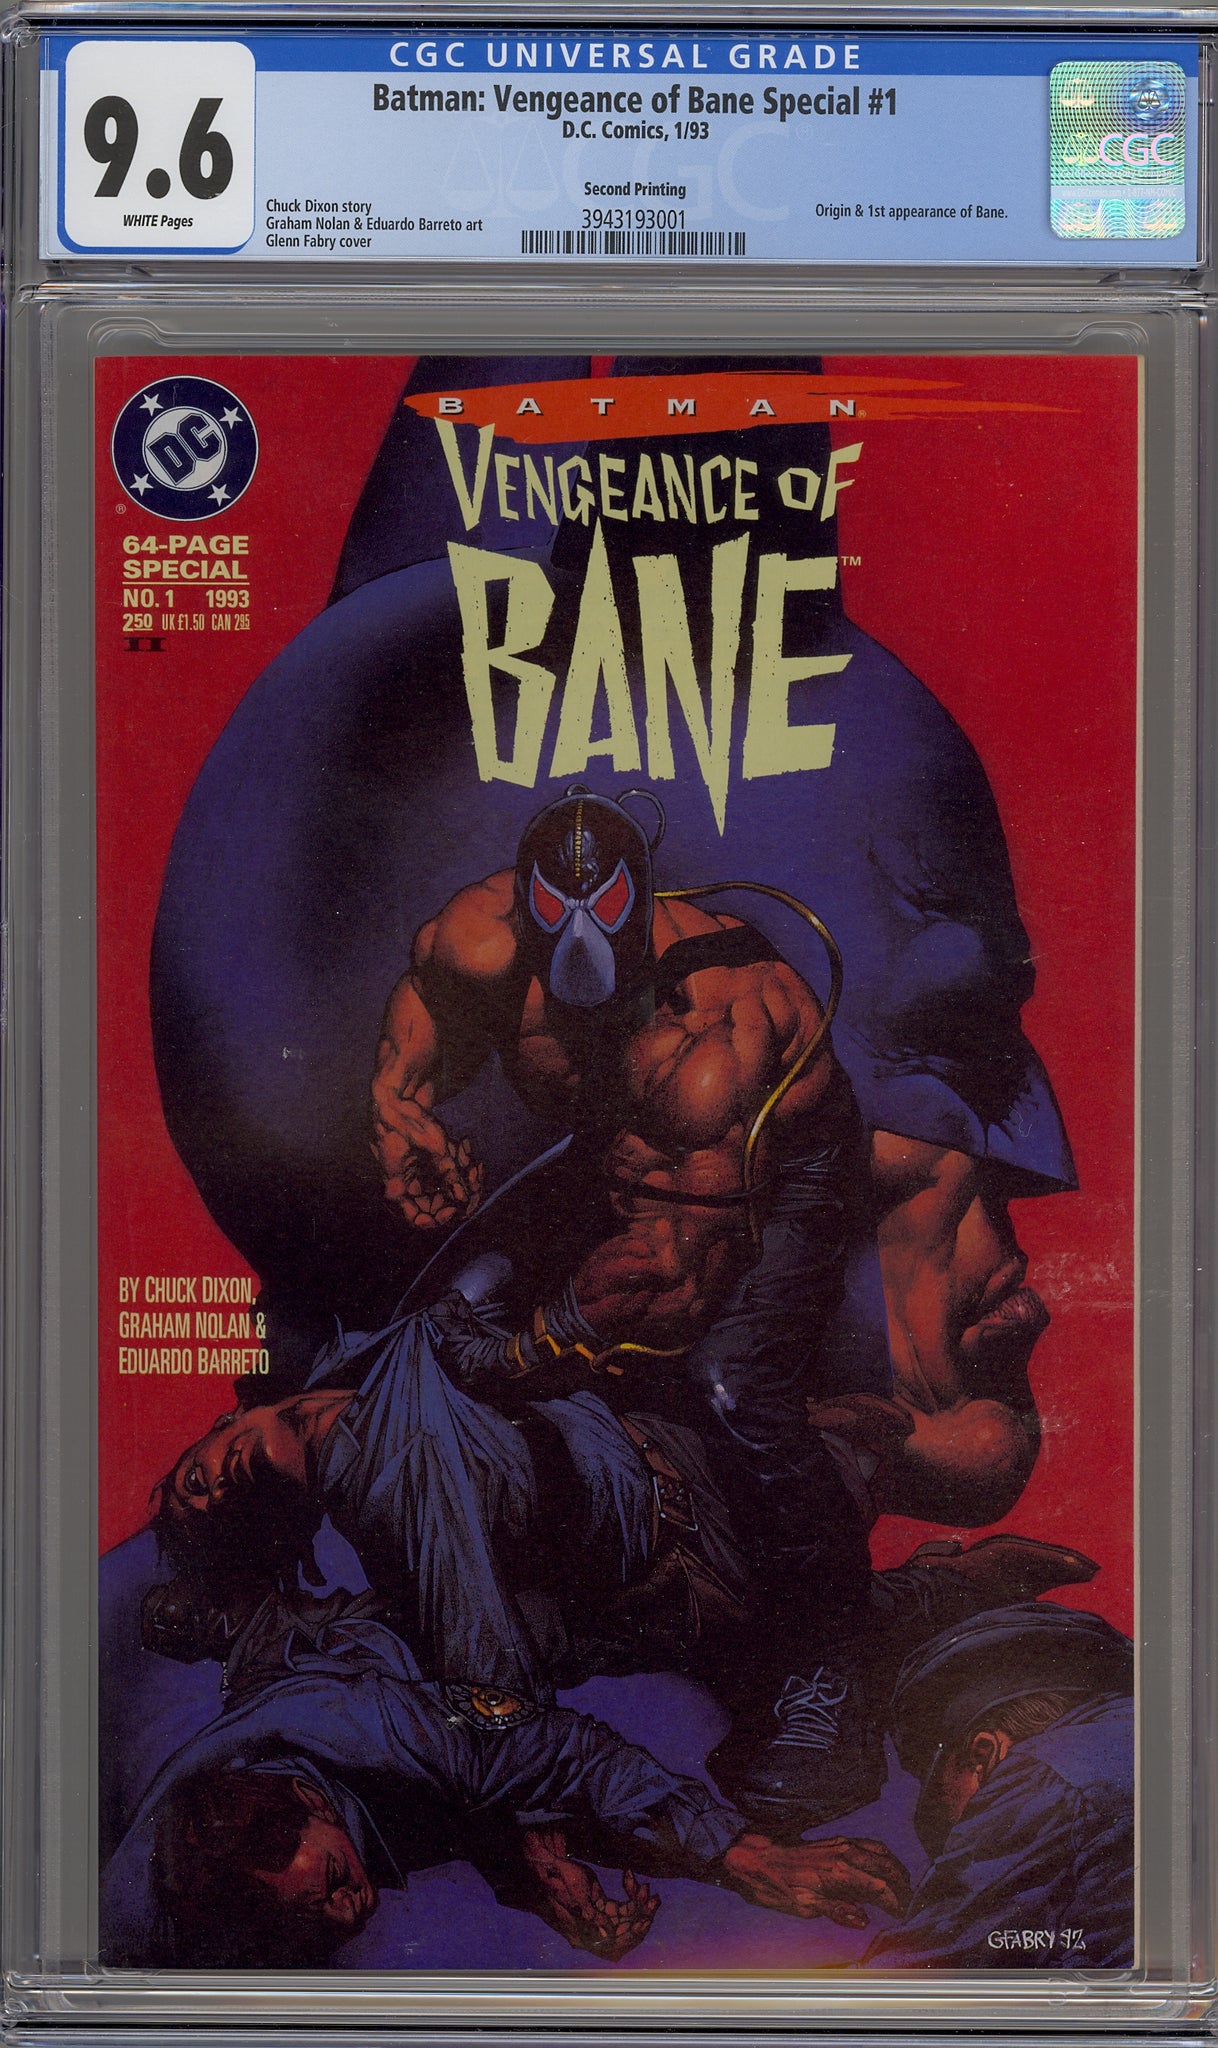 Batman:  Vengeance of Bane Special #1 (1993) second printing - Bane